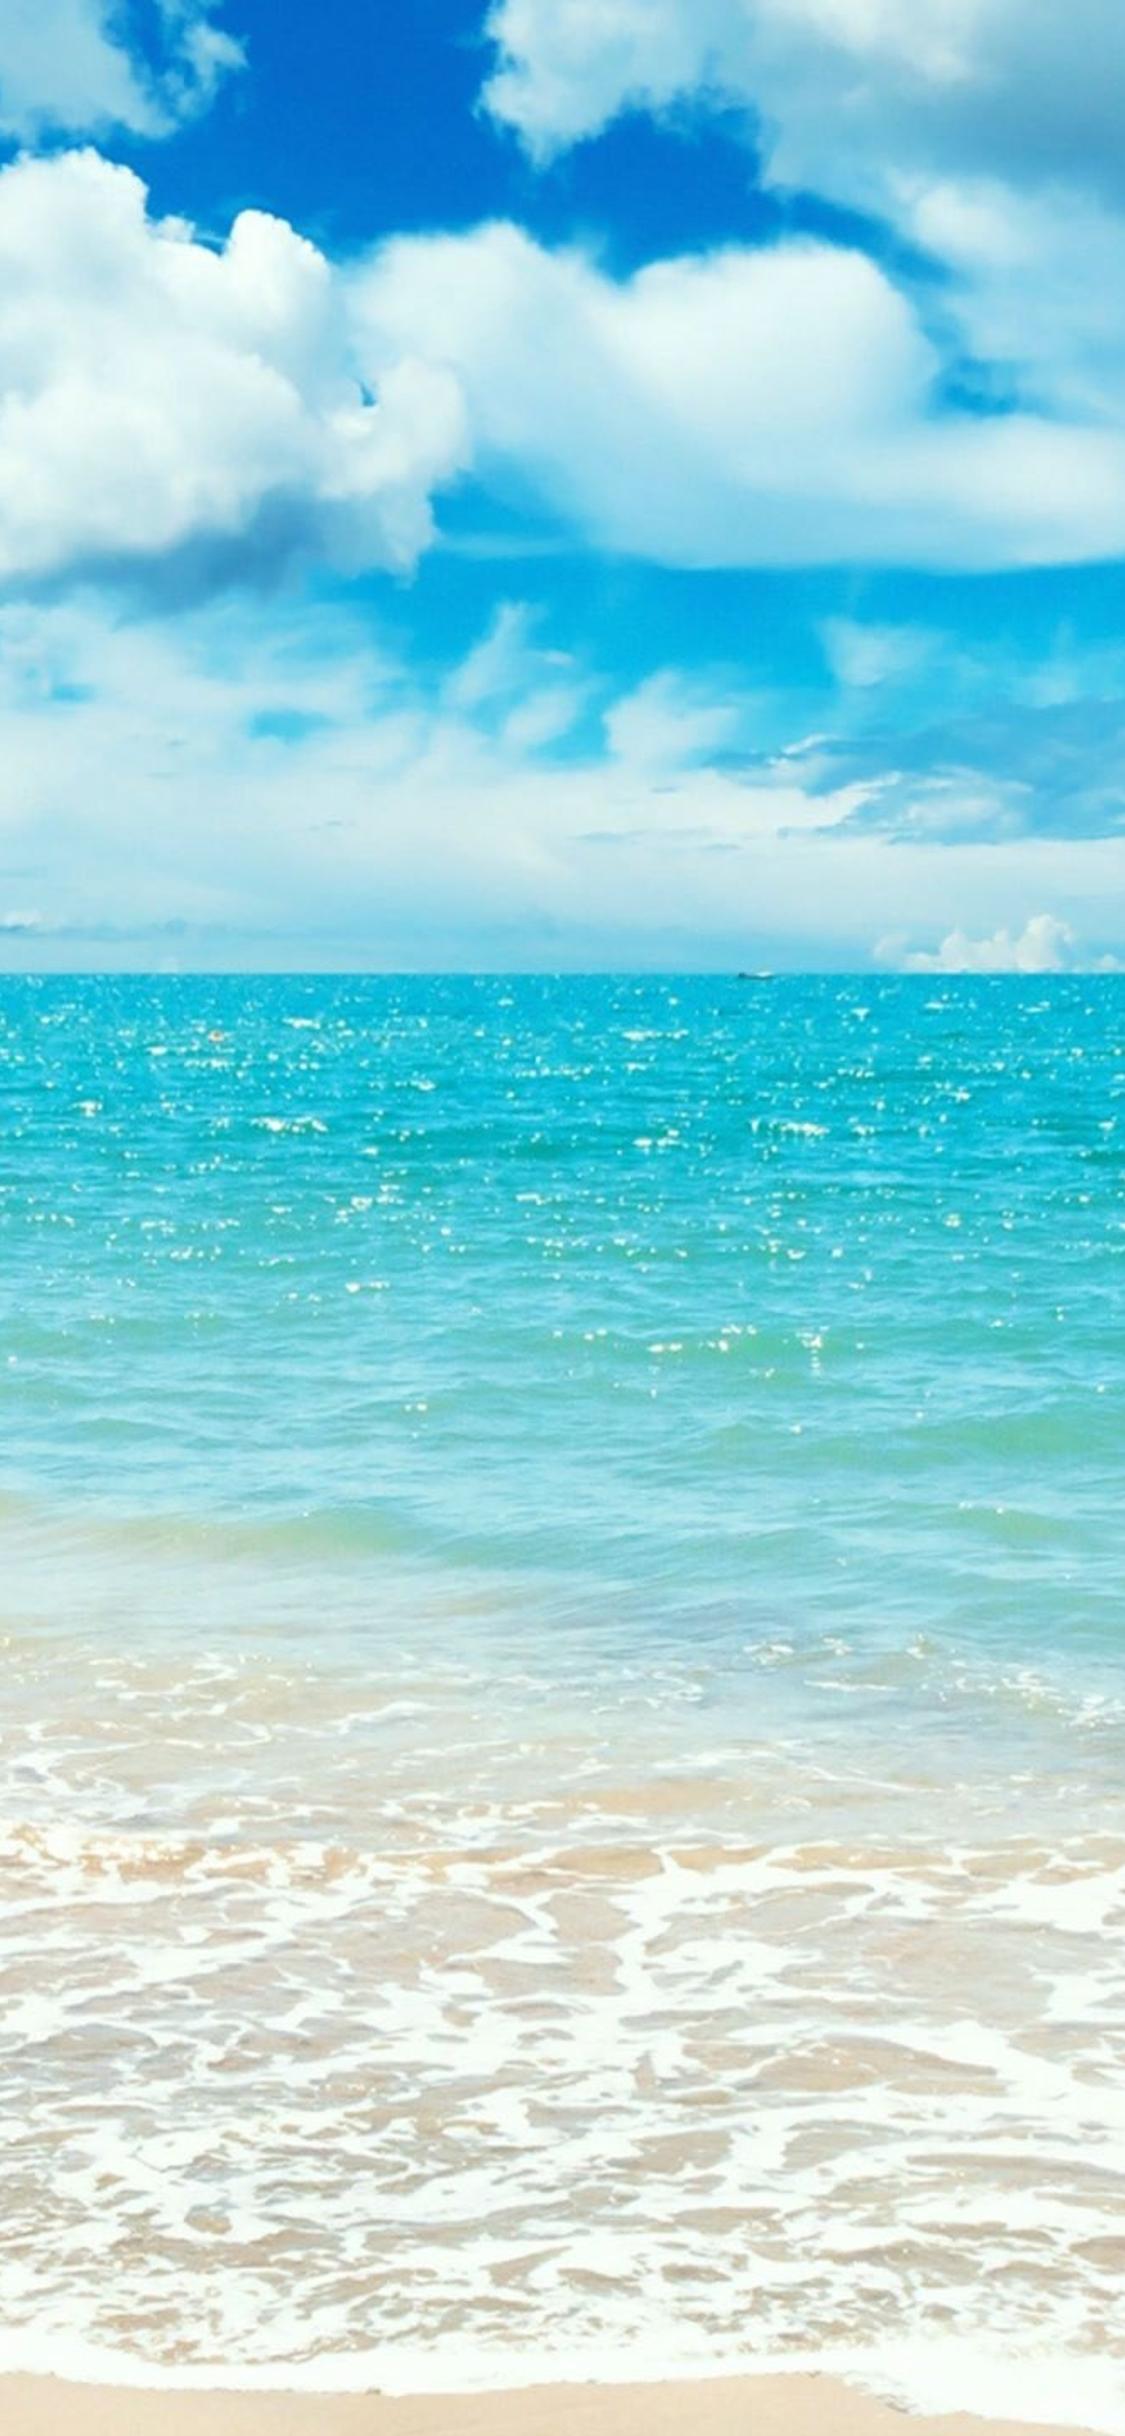 Perfect blue ocean water - Happy summer at seaside